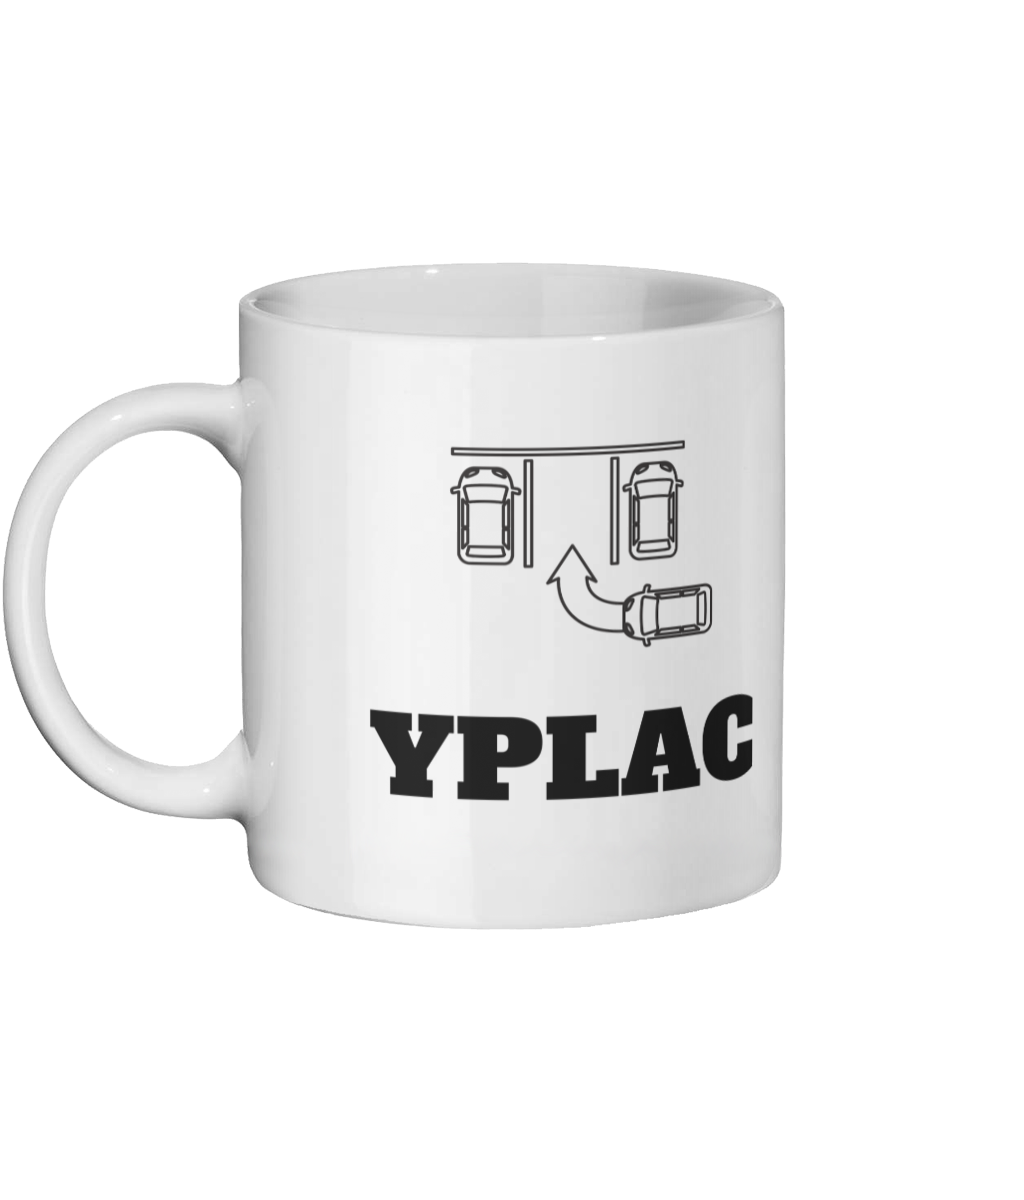 YPLAC Mug Left